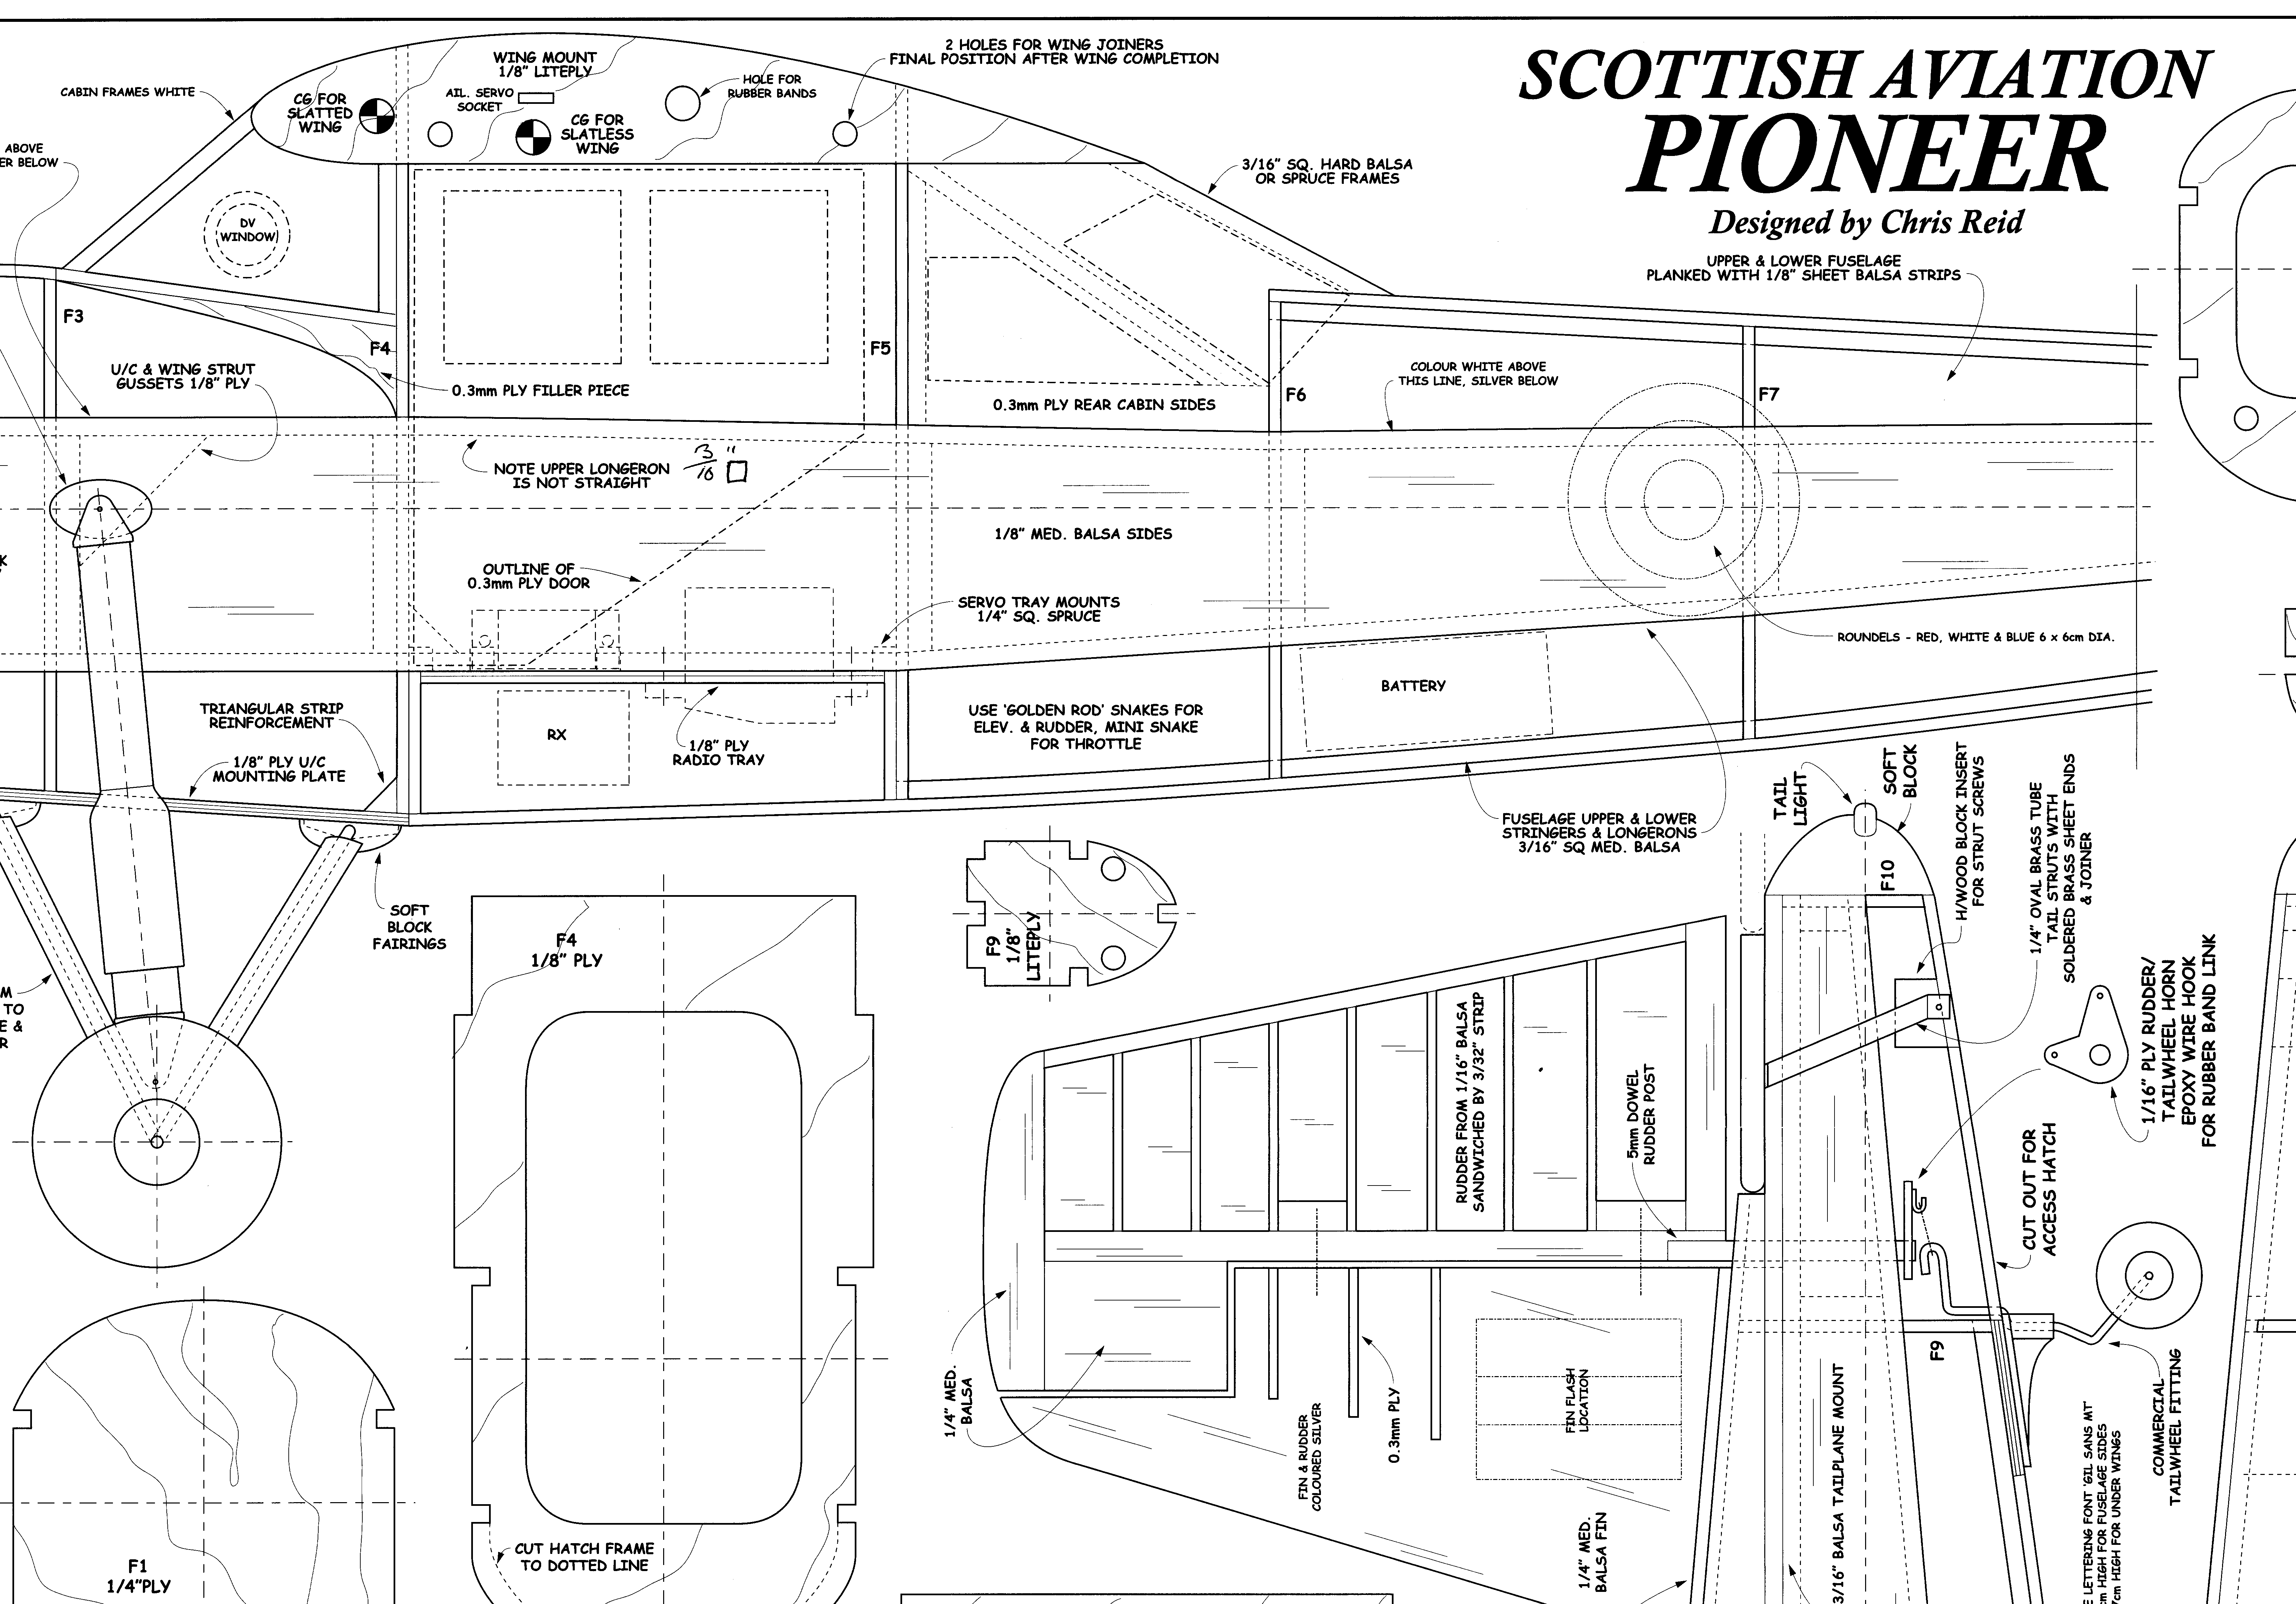 Scottish Aviation Pioneer - RCME Plan March 2007